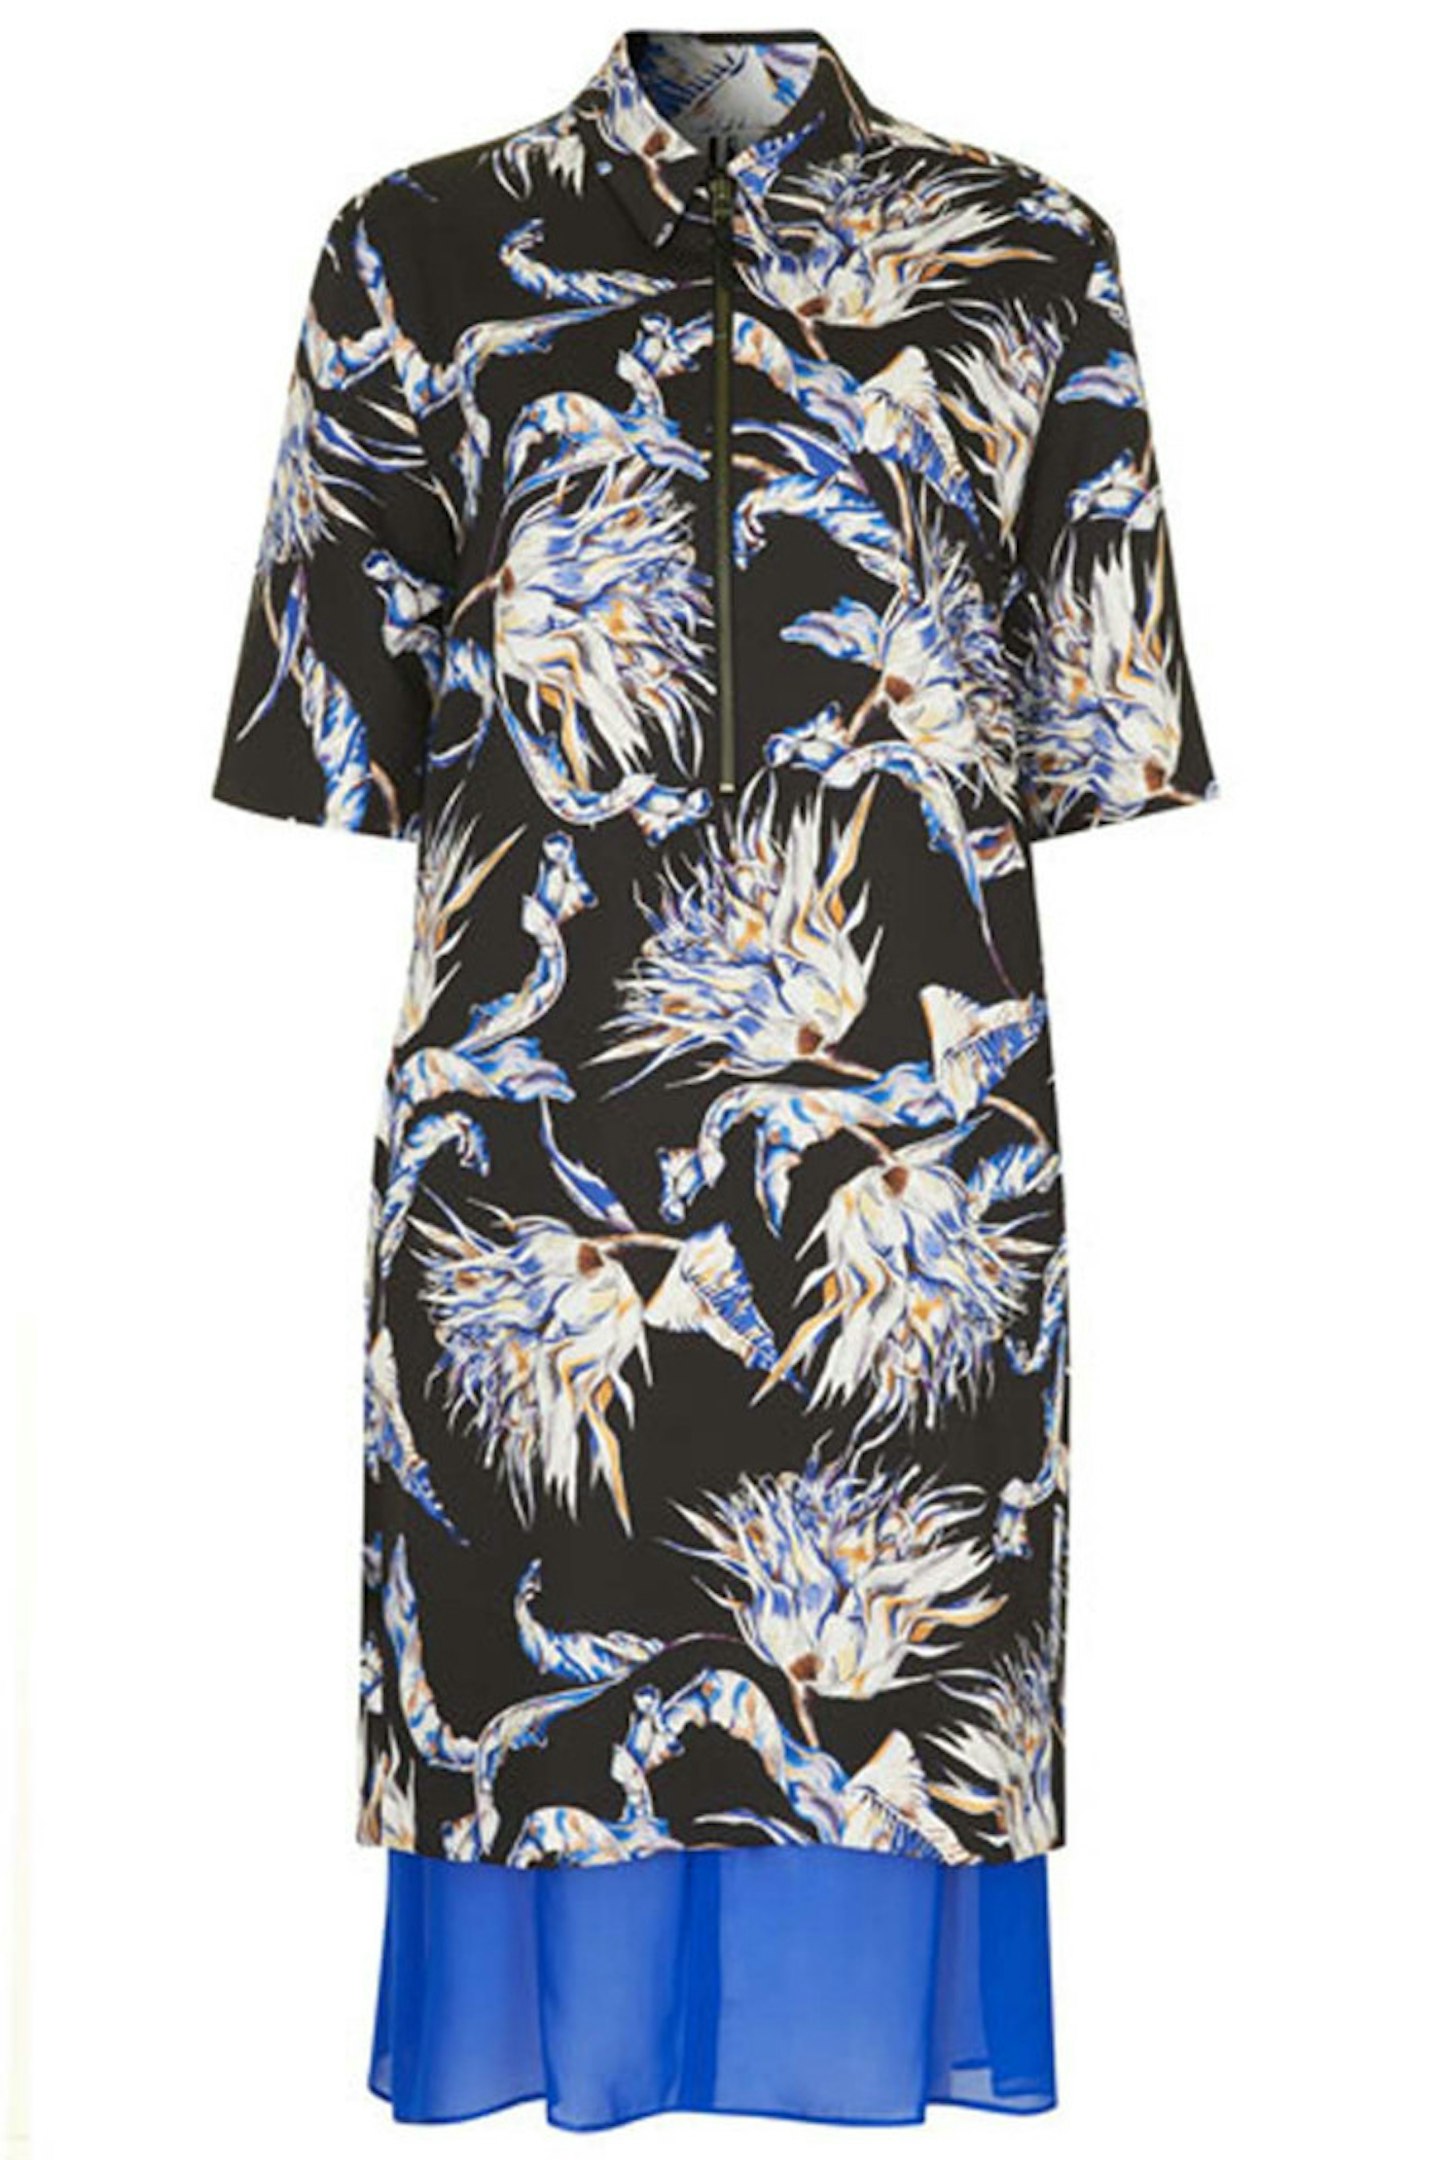 Black Floral Print Shirt Dress, £195, Unique at Topshop